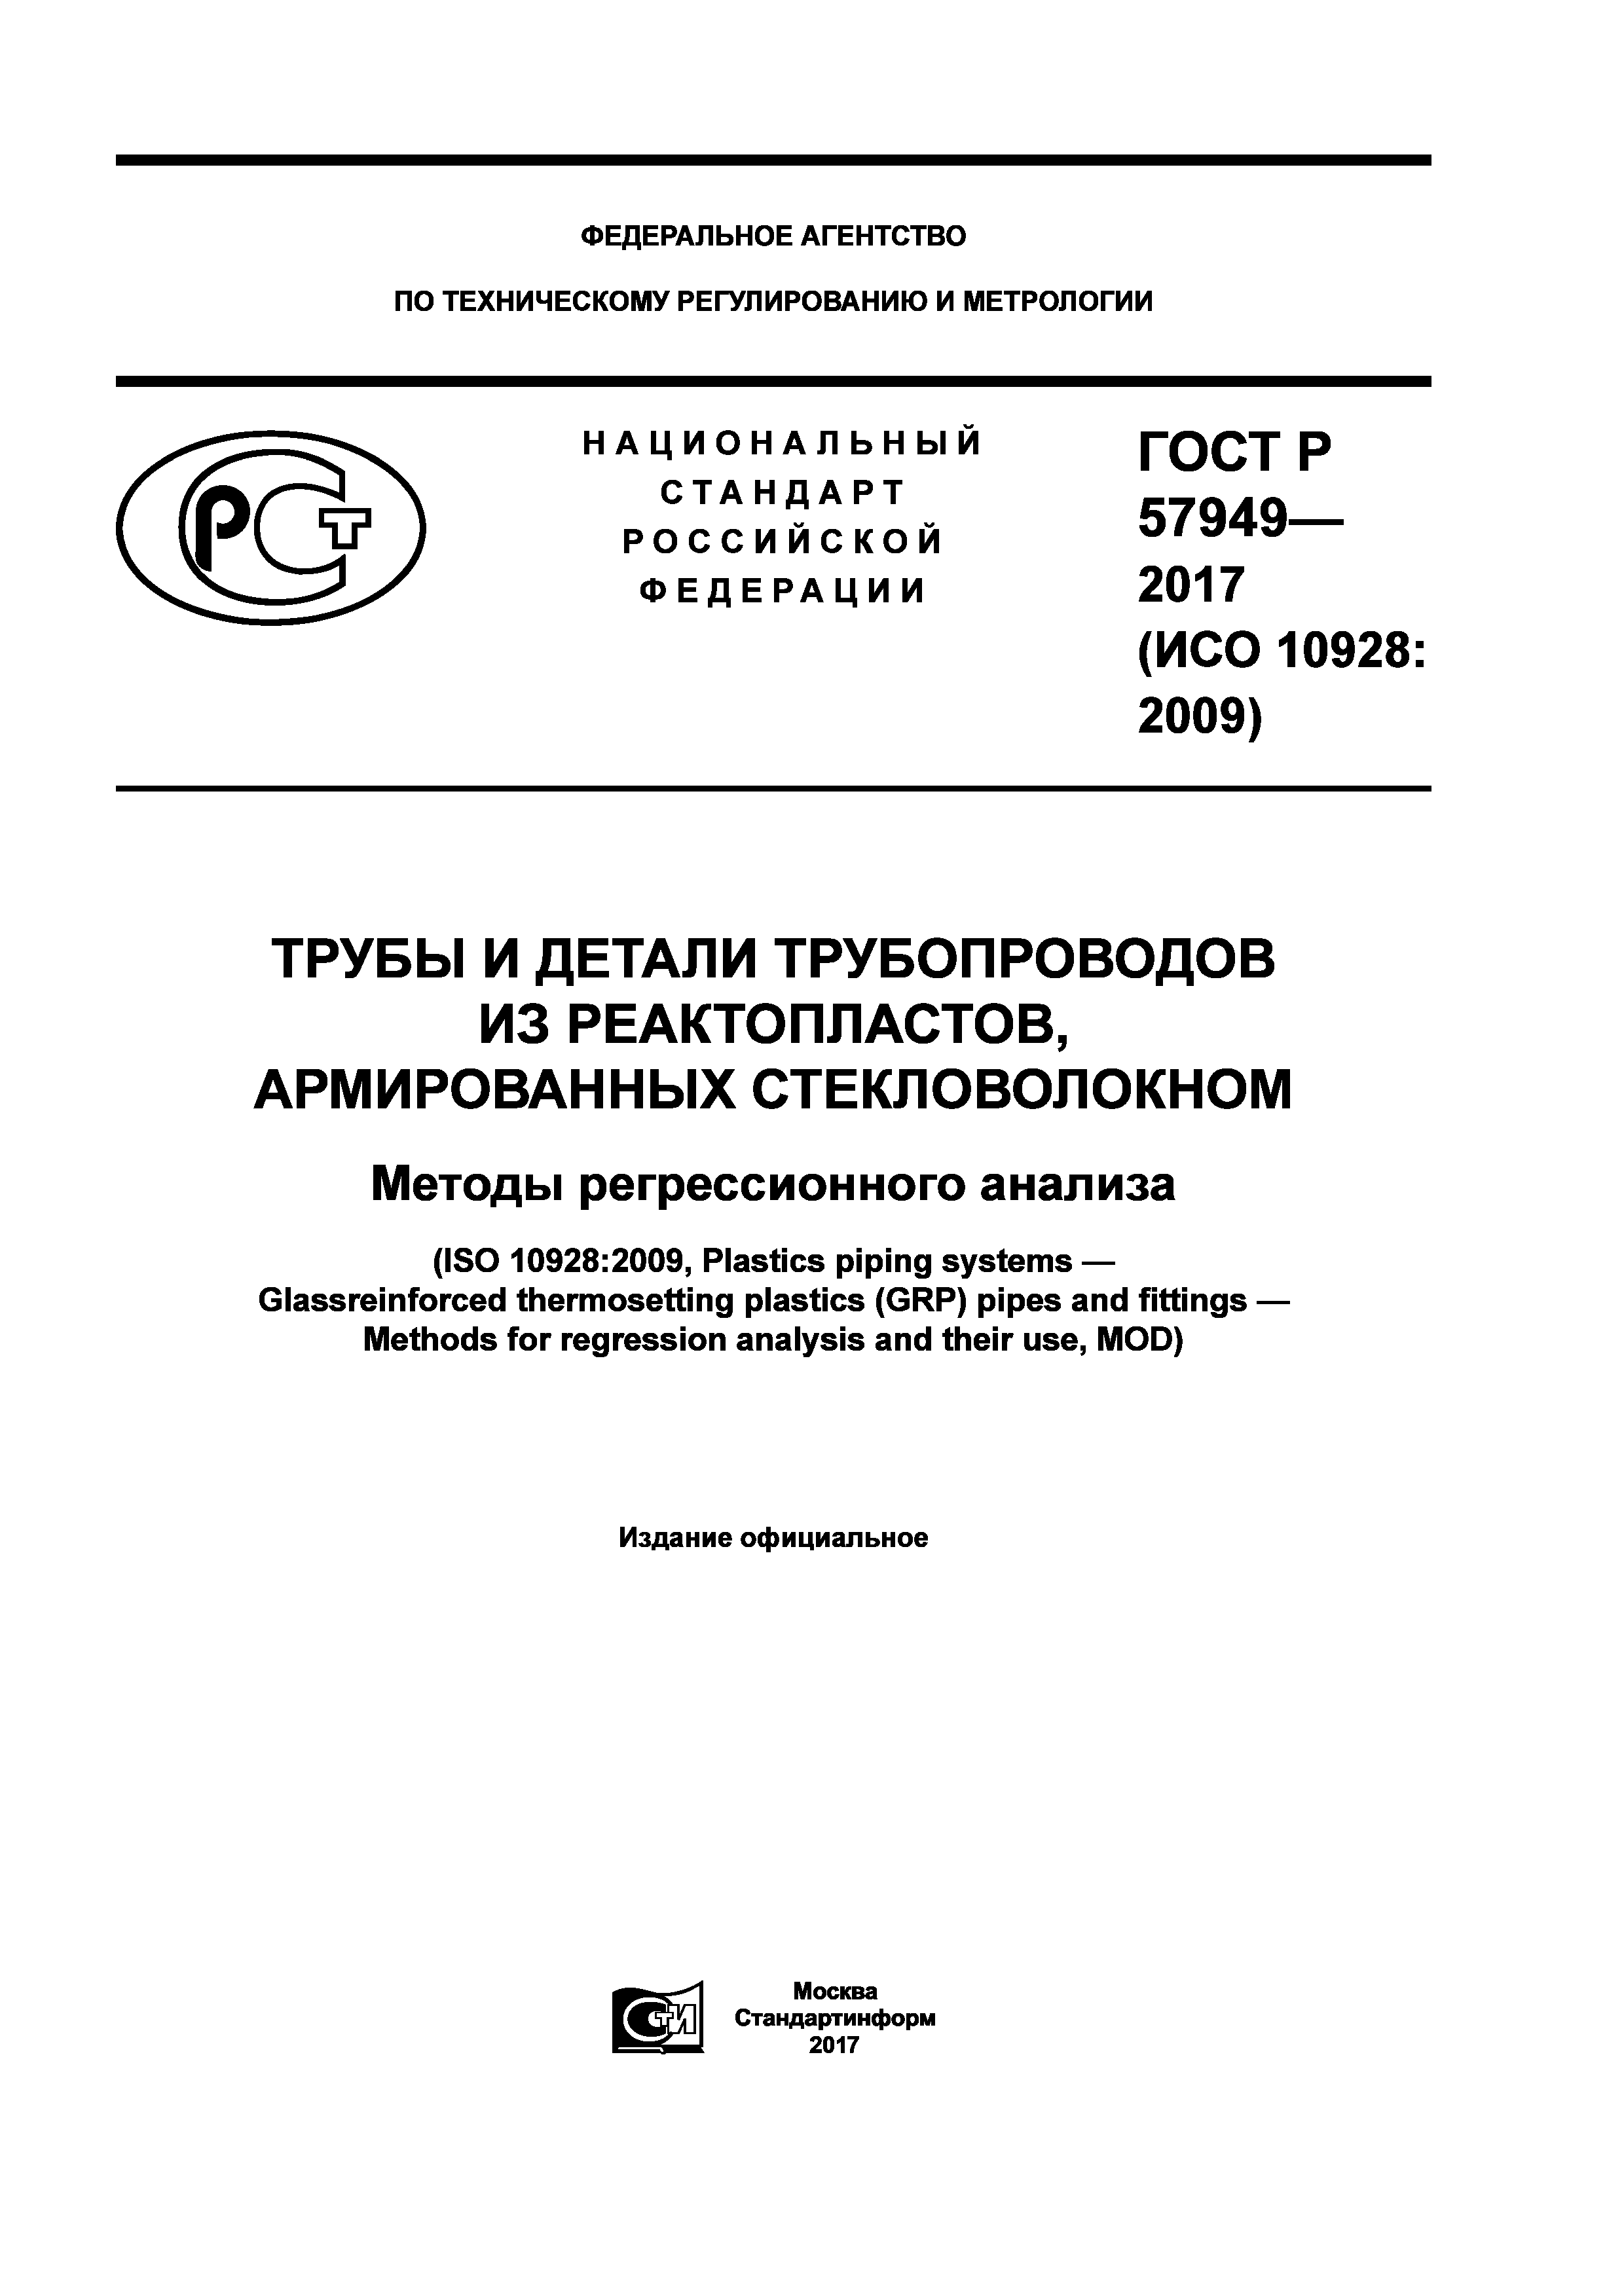 ГОСТ Р 57949-2017